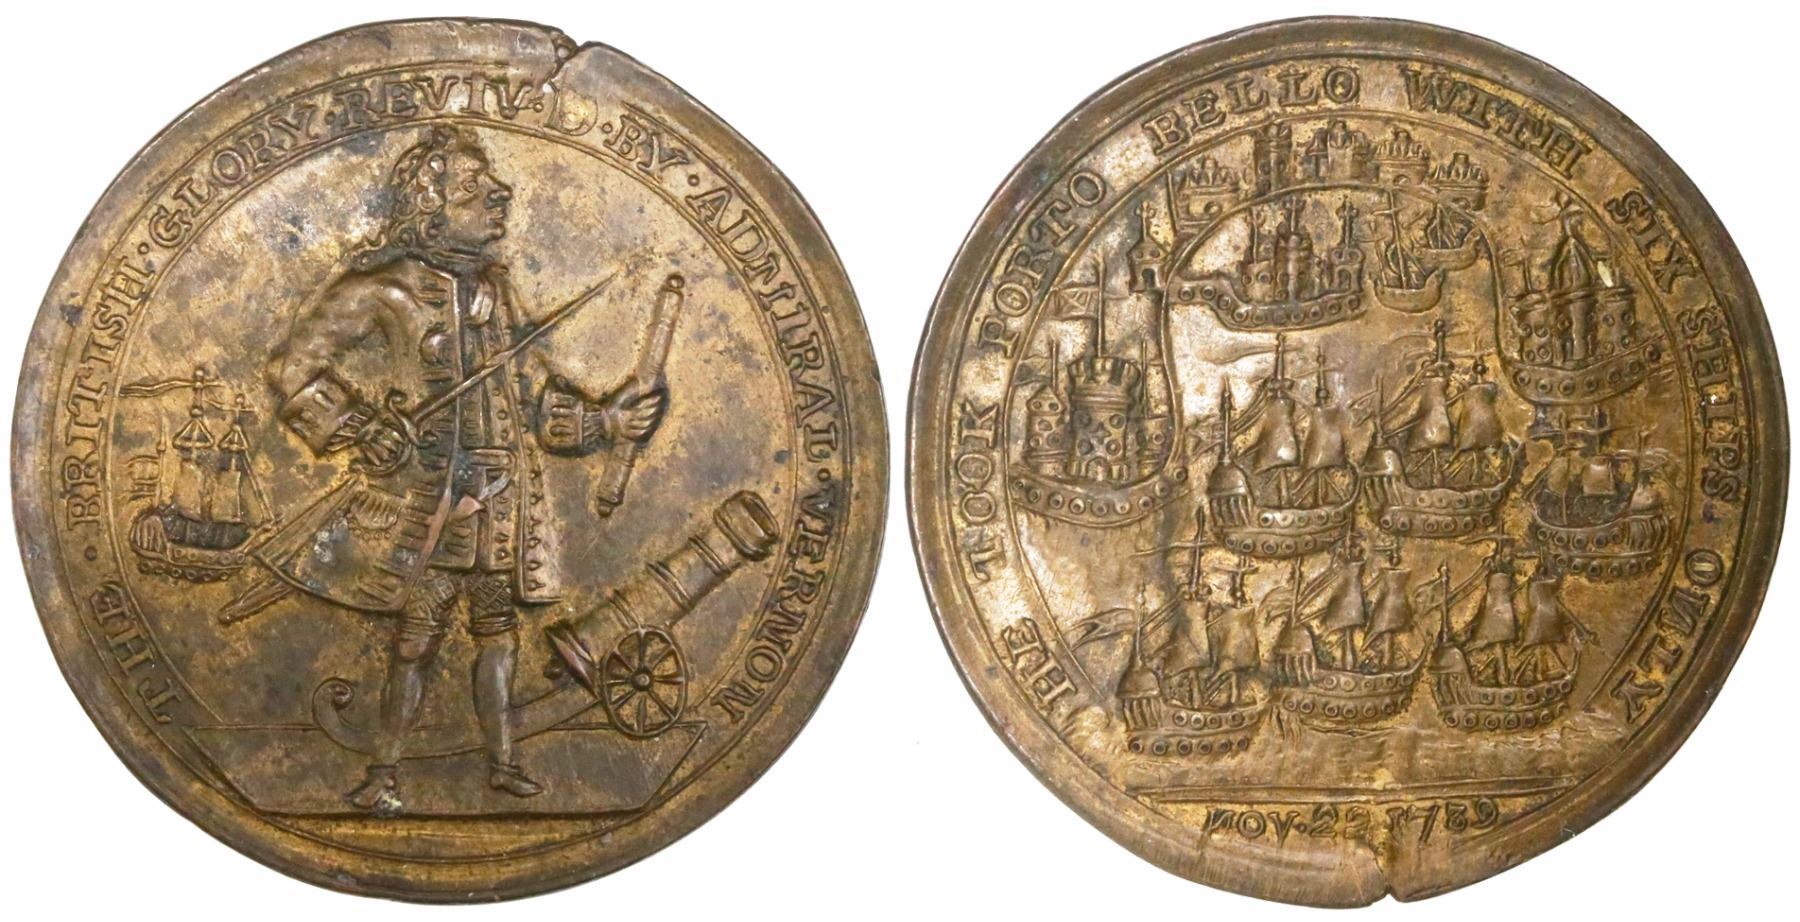 Admiral Vernon medals 1739, 1741. Images courtesy Daniel Frank Sedwick, LLC